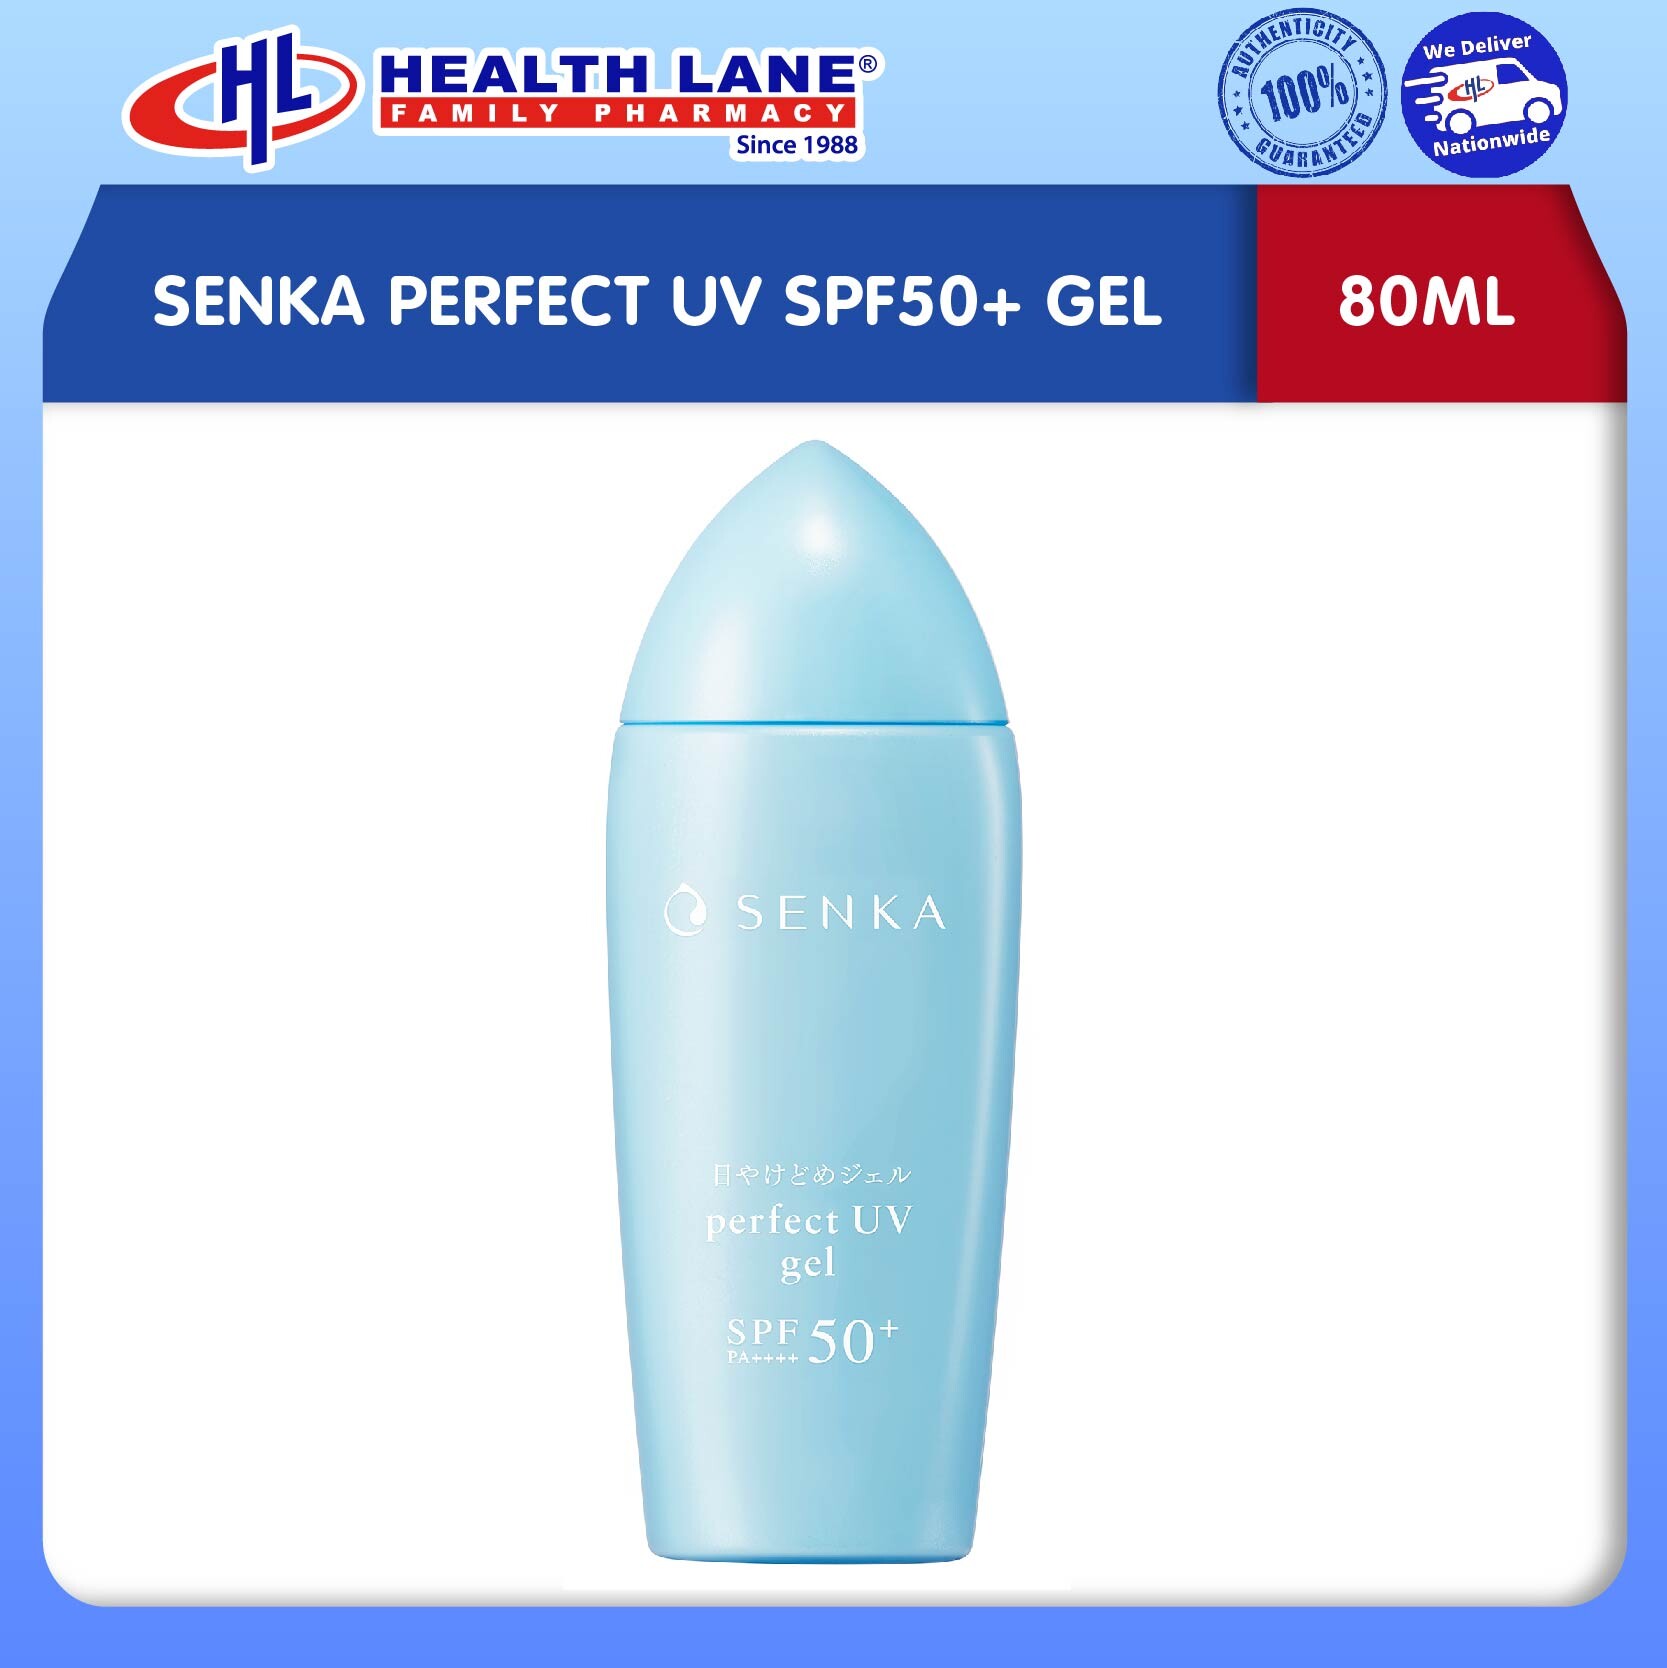 SENKA PERFECT UV SPF50+ GEL (80ML)